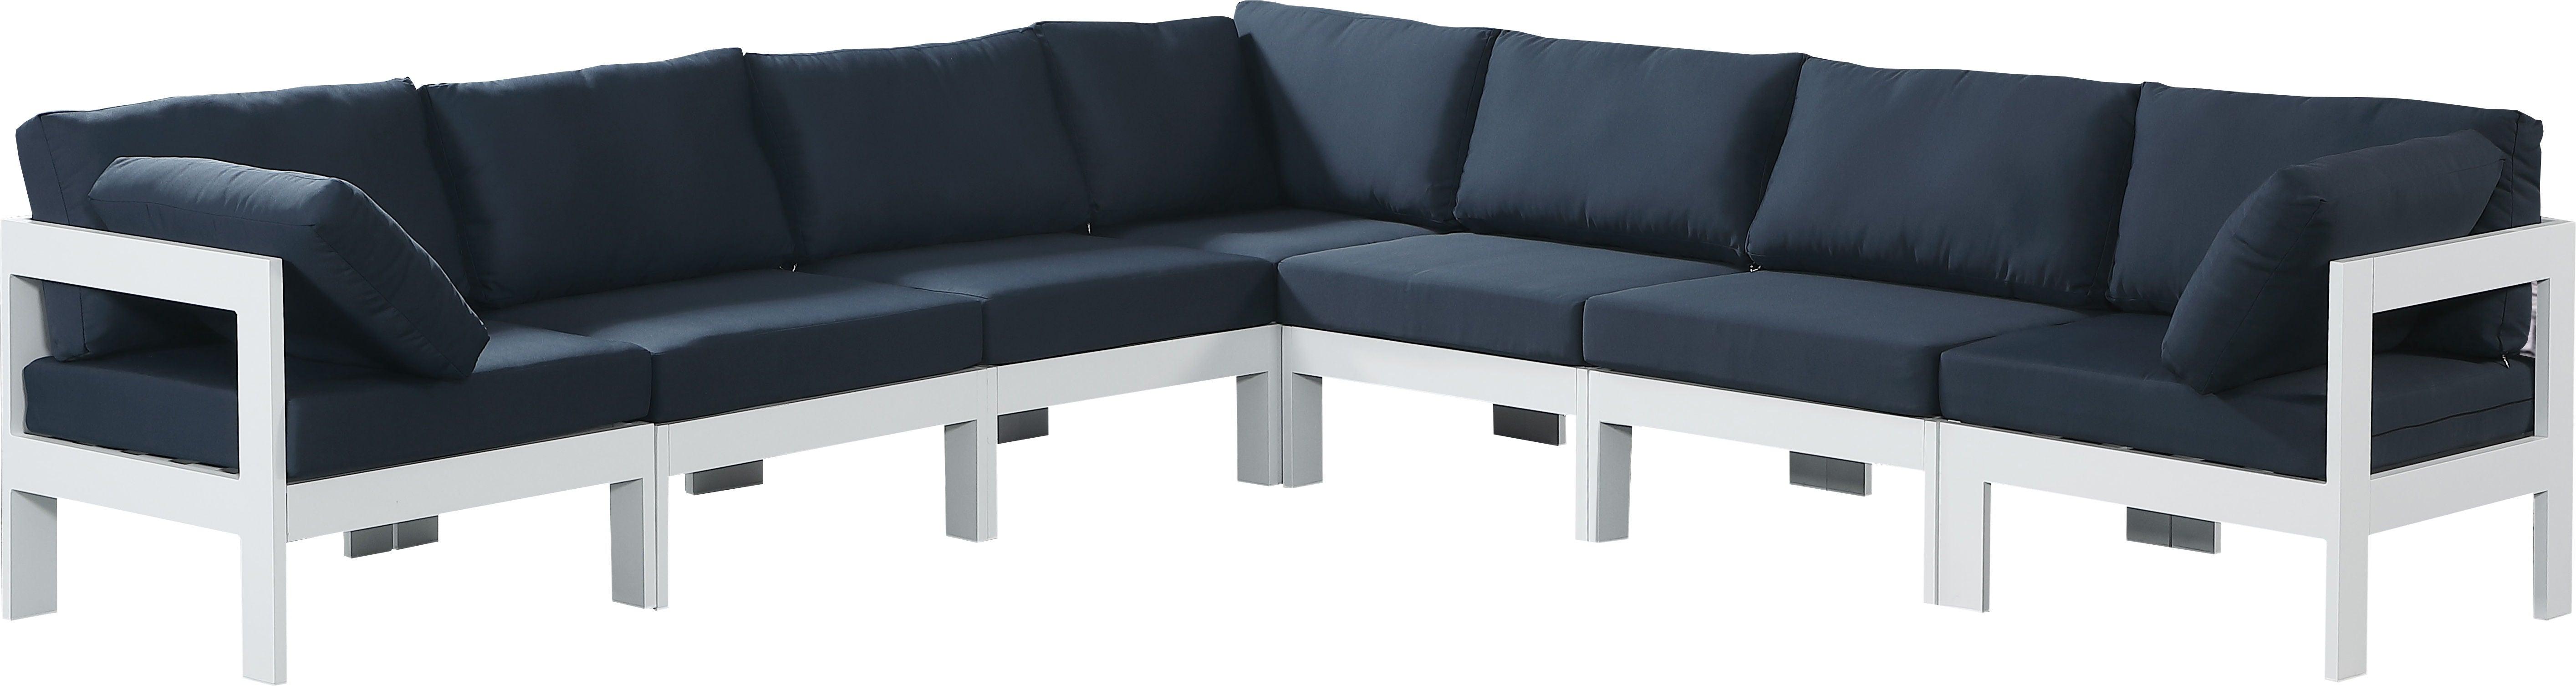 Meridian Furniture - Nizuc - Outdoor Patio Modular Sectional 7 Piece - Navy - Fabric - Modern & Contemporary - 5th Avenue Furniture